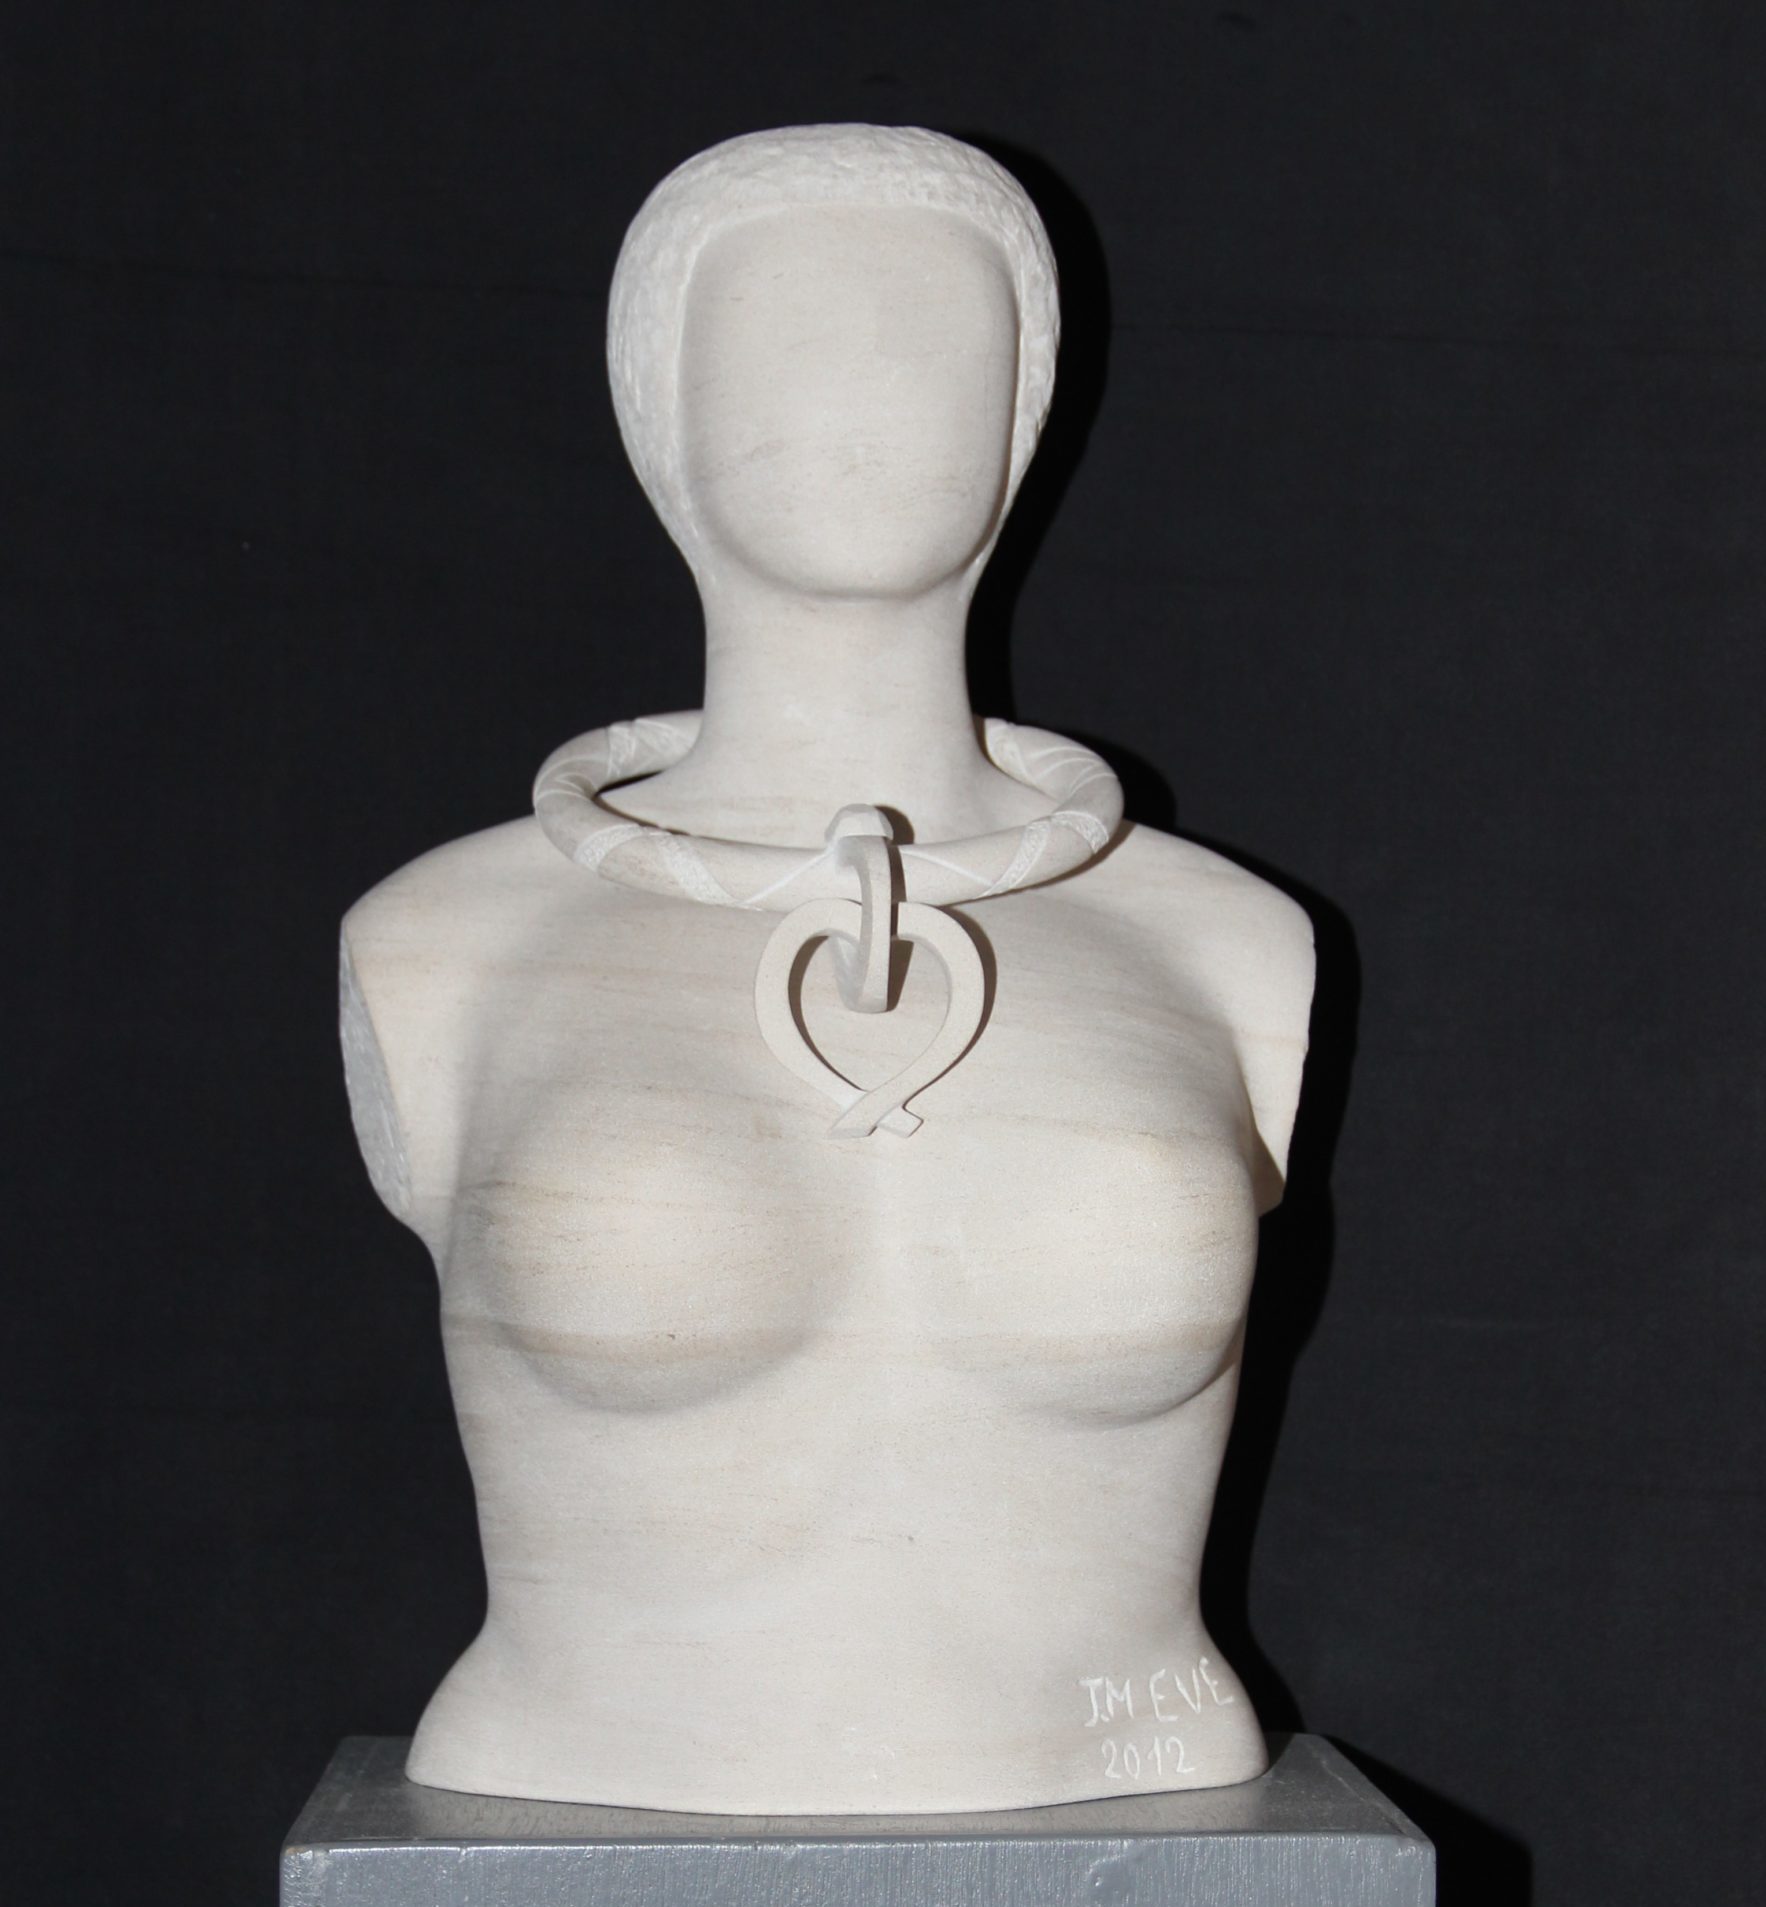 Sculpture de Jean-Marie Eve, en vente au profit de l'Ukraine.